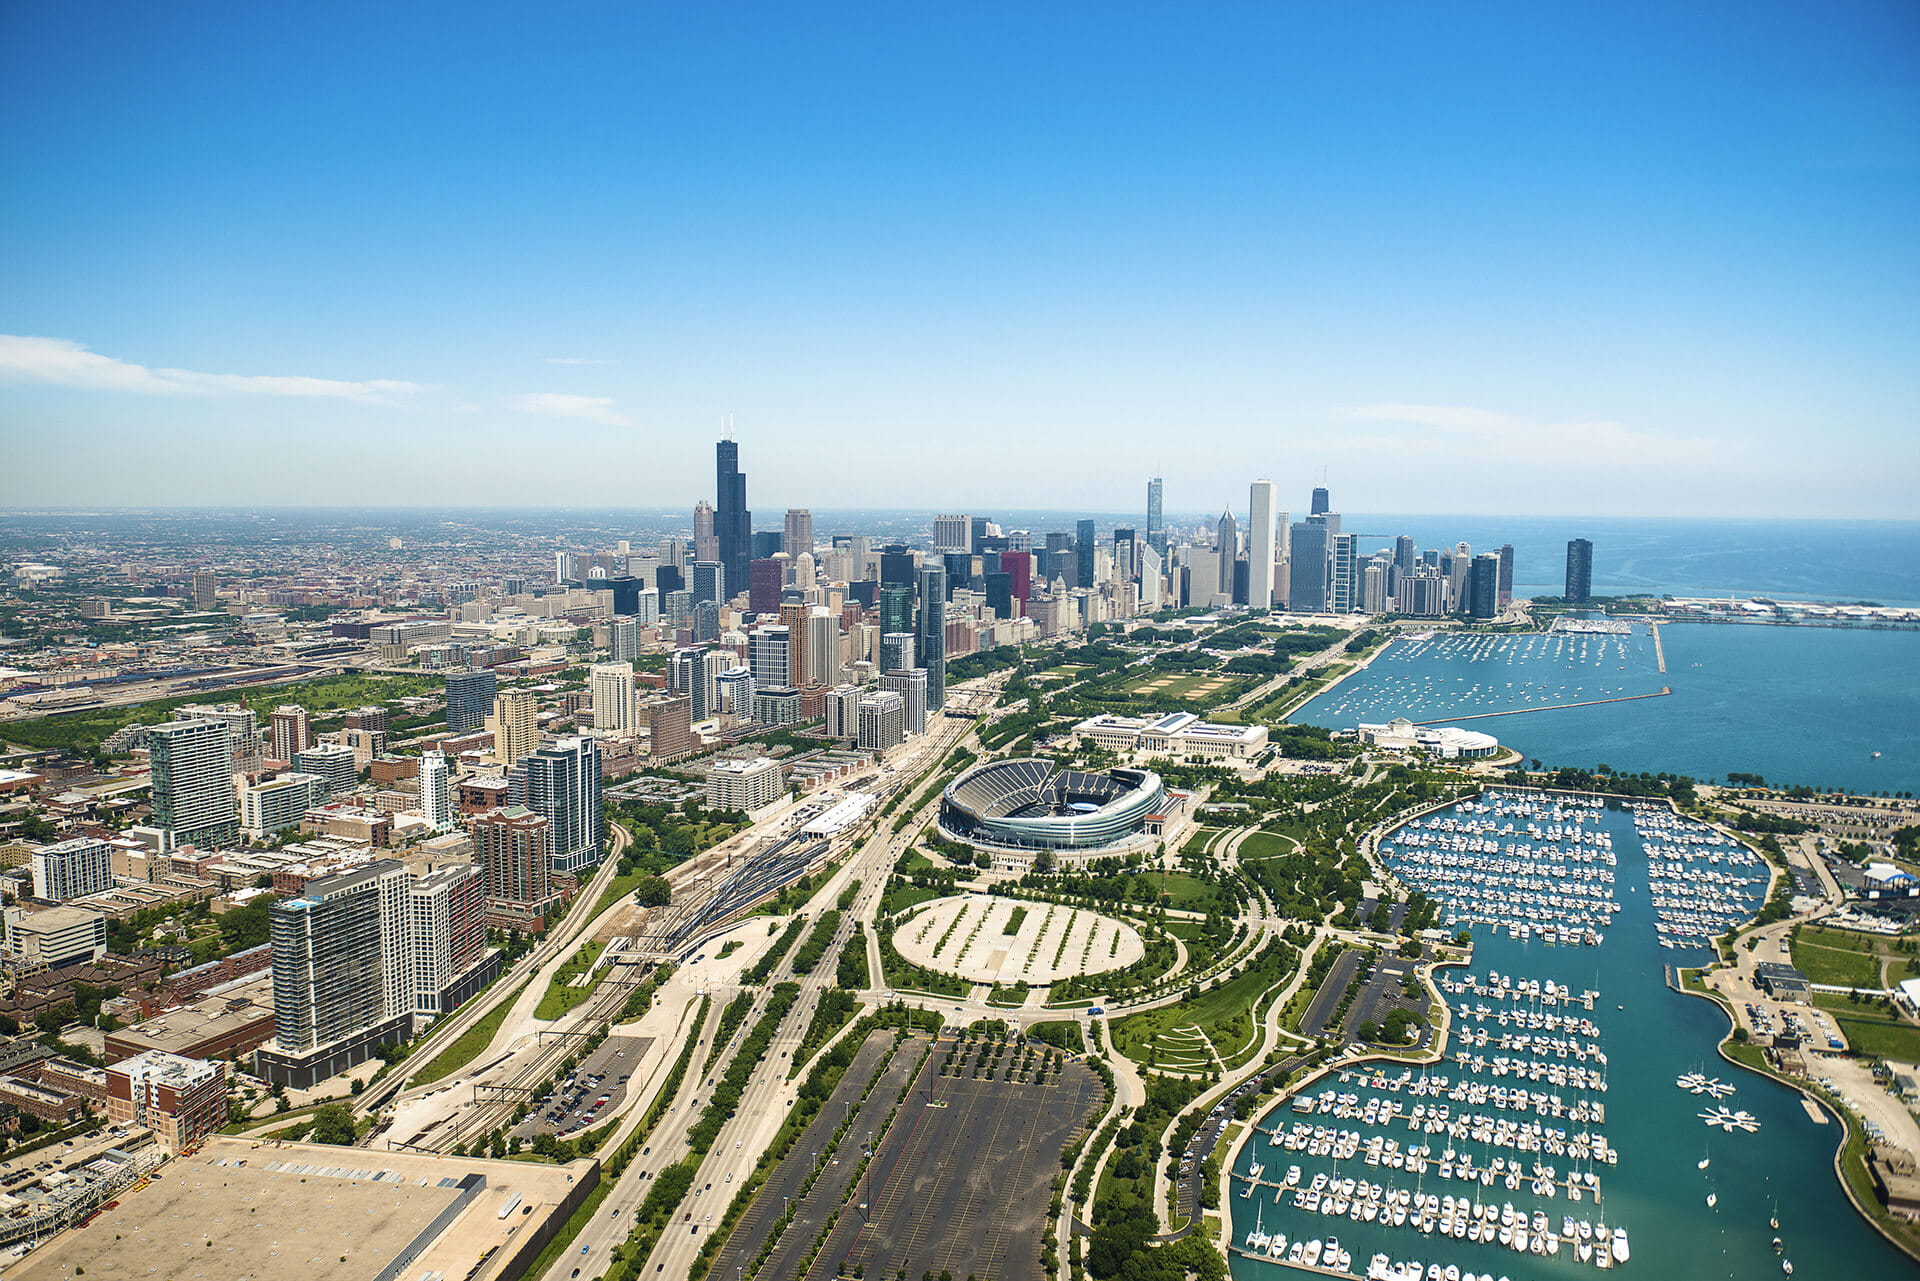 Bird's eye view of Chicago Skyline